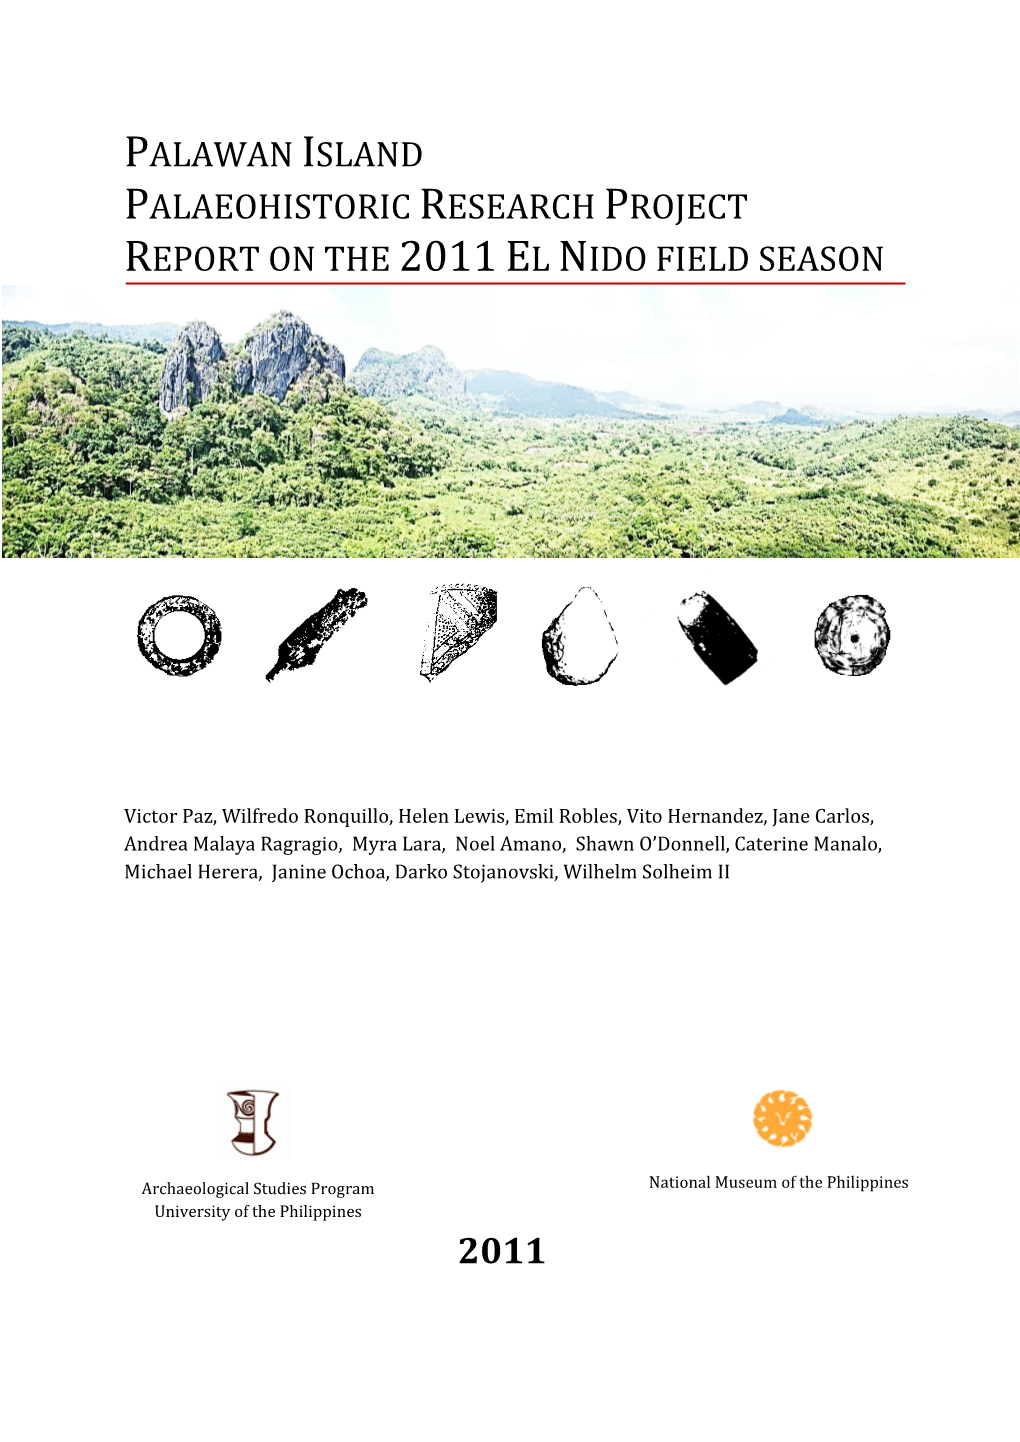 Palawan Island Palaeohistoric Research Project Report on the 2011 El Nido Field Season